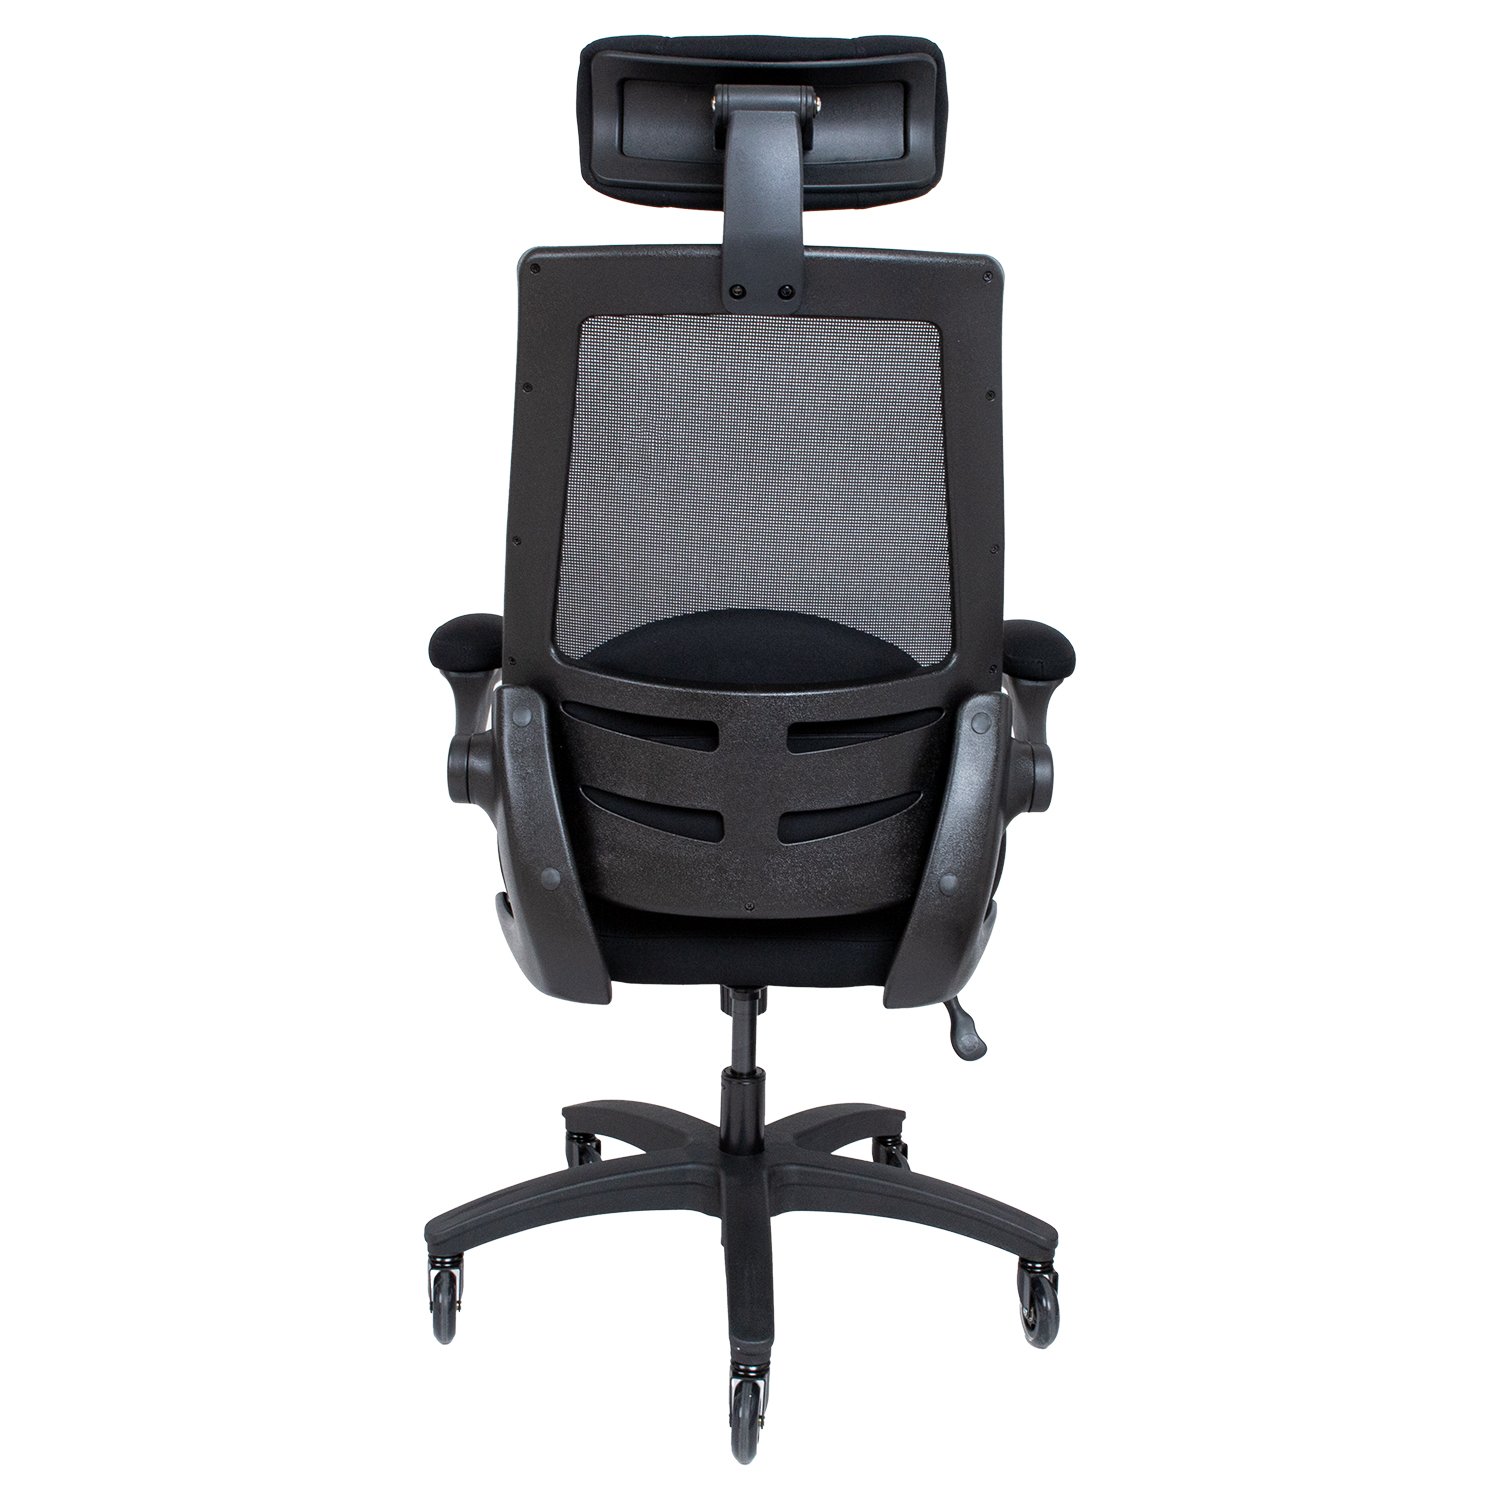 Biuro kėdė MILLER, 70x71x121-131 cm, juoda - 4